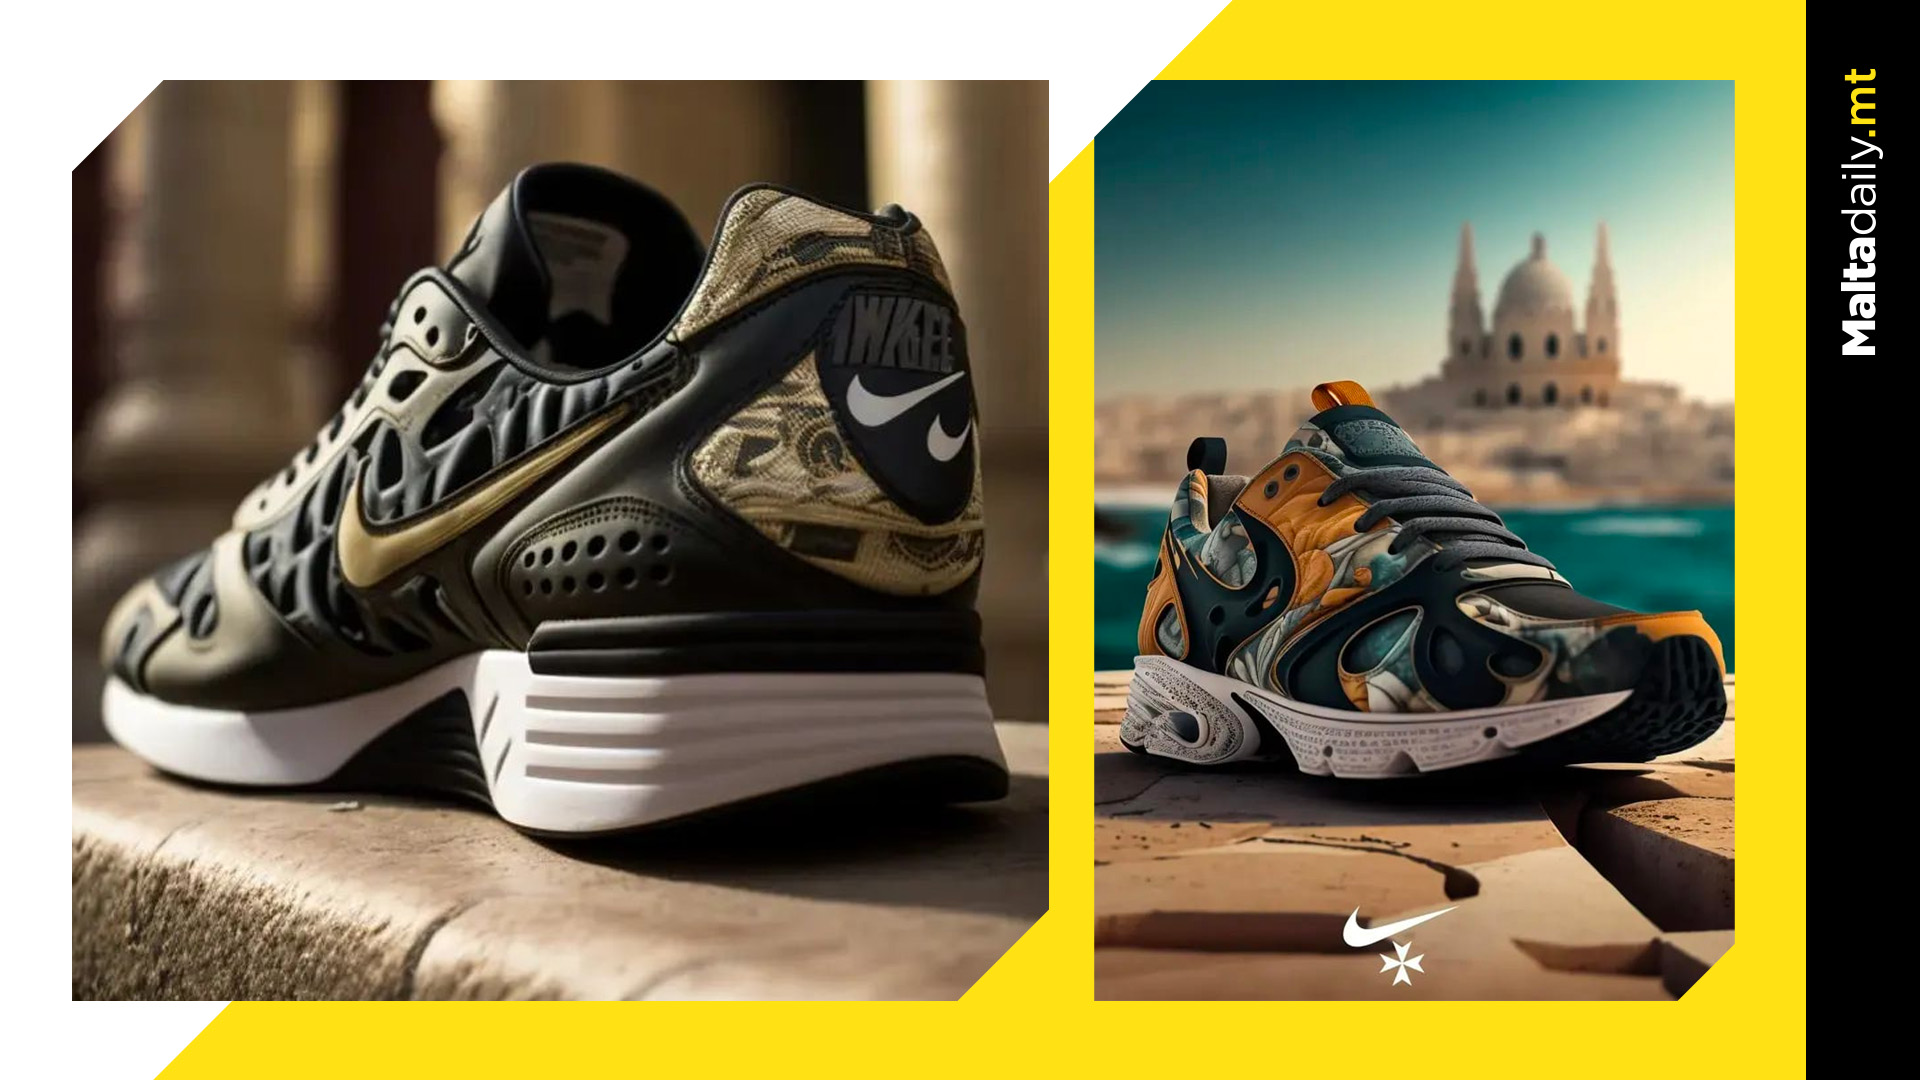 AI creator unveils Malta-themed Nike sneakers